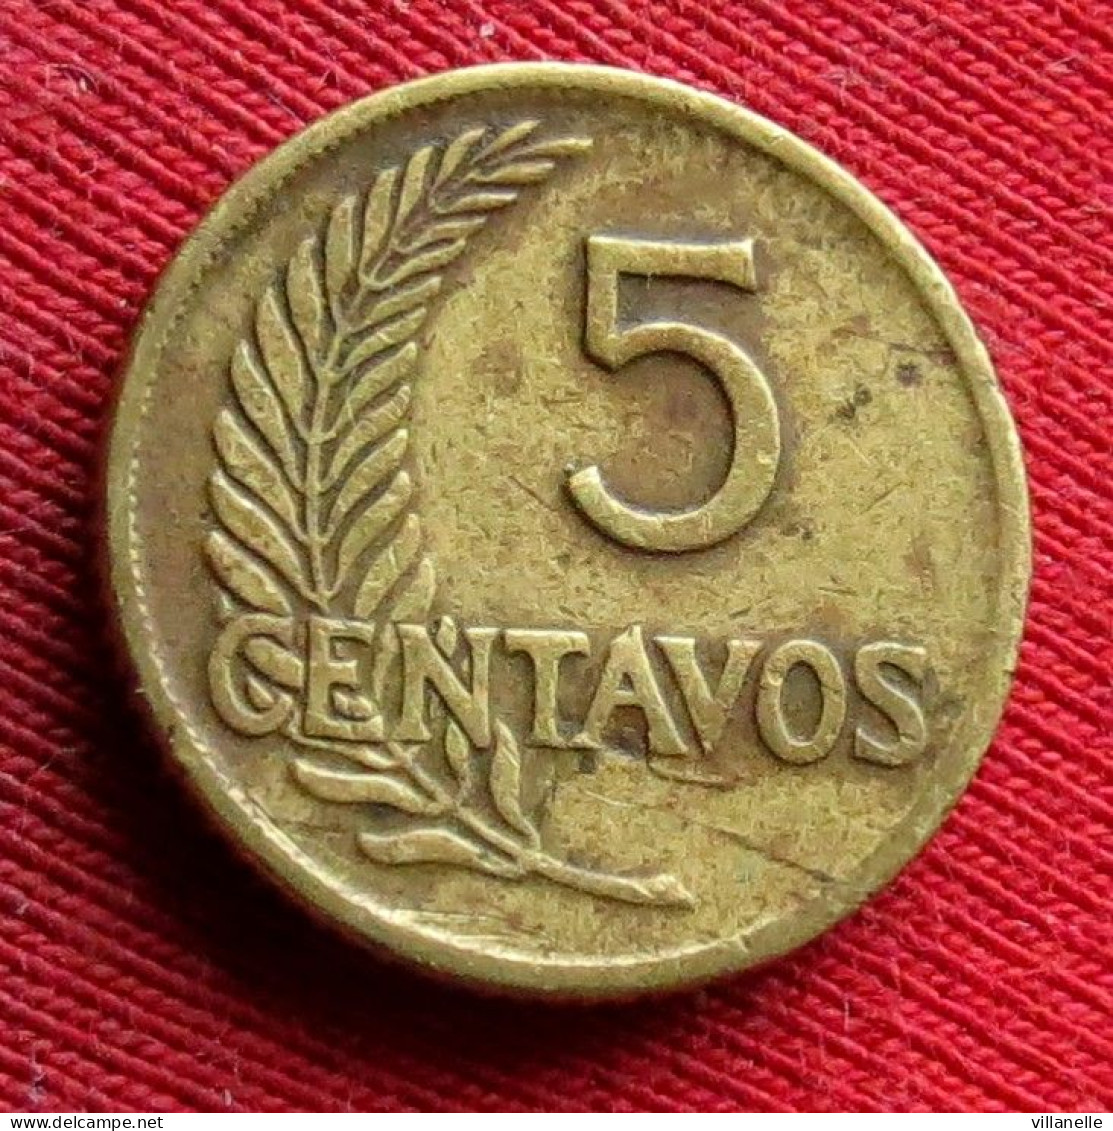 Peru 5 Centavos 1949 Perou  W ºº - Peru